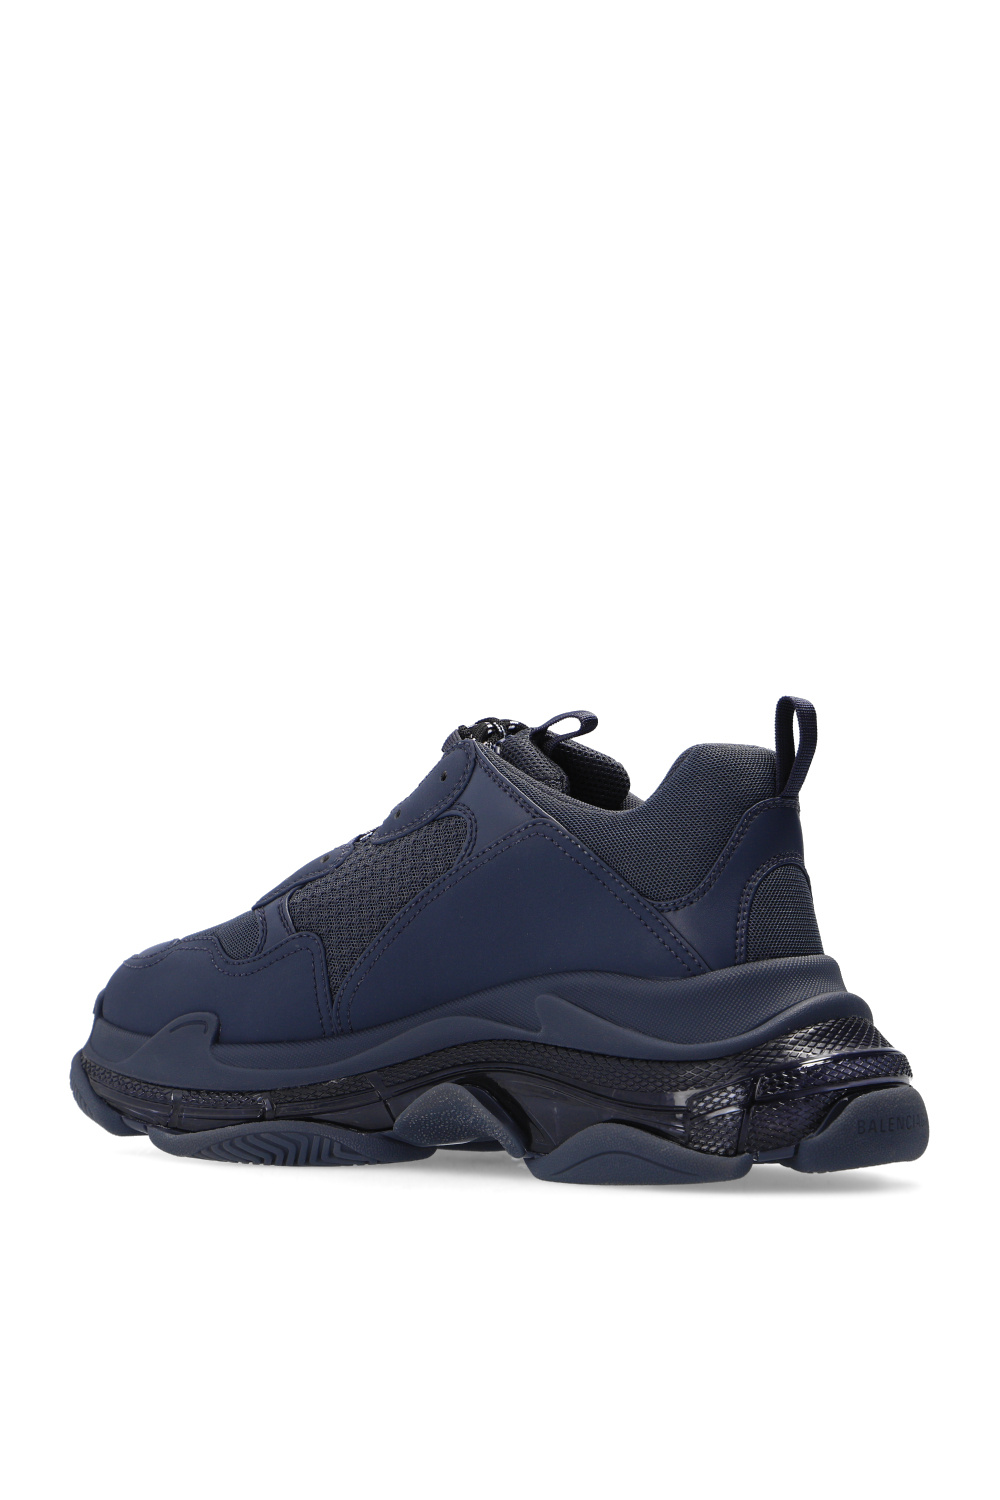 sandals clarks tealite grace 261238944 navy - 'Triple S' sneakers 